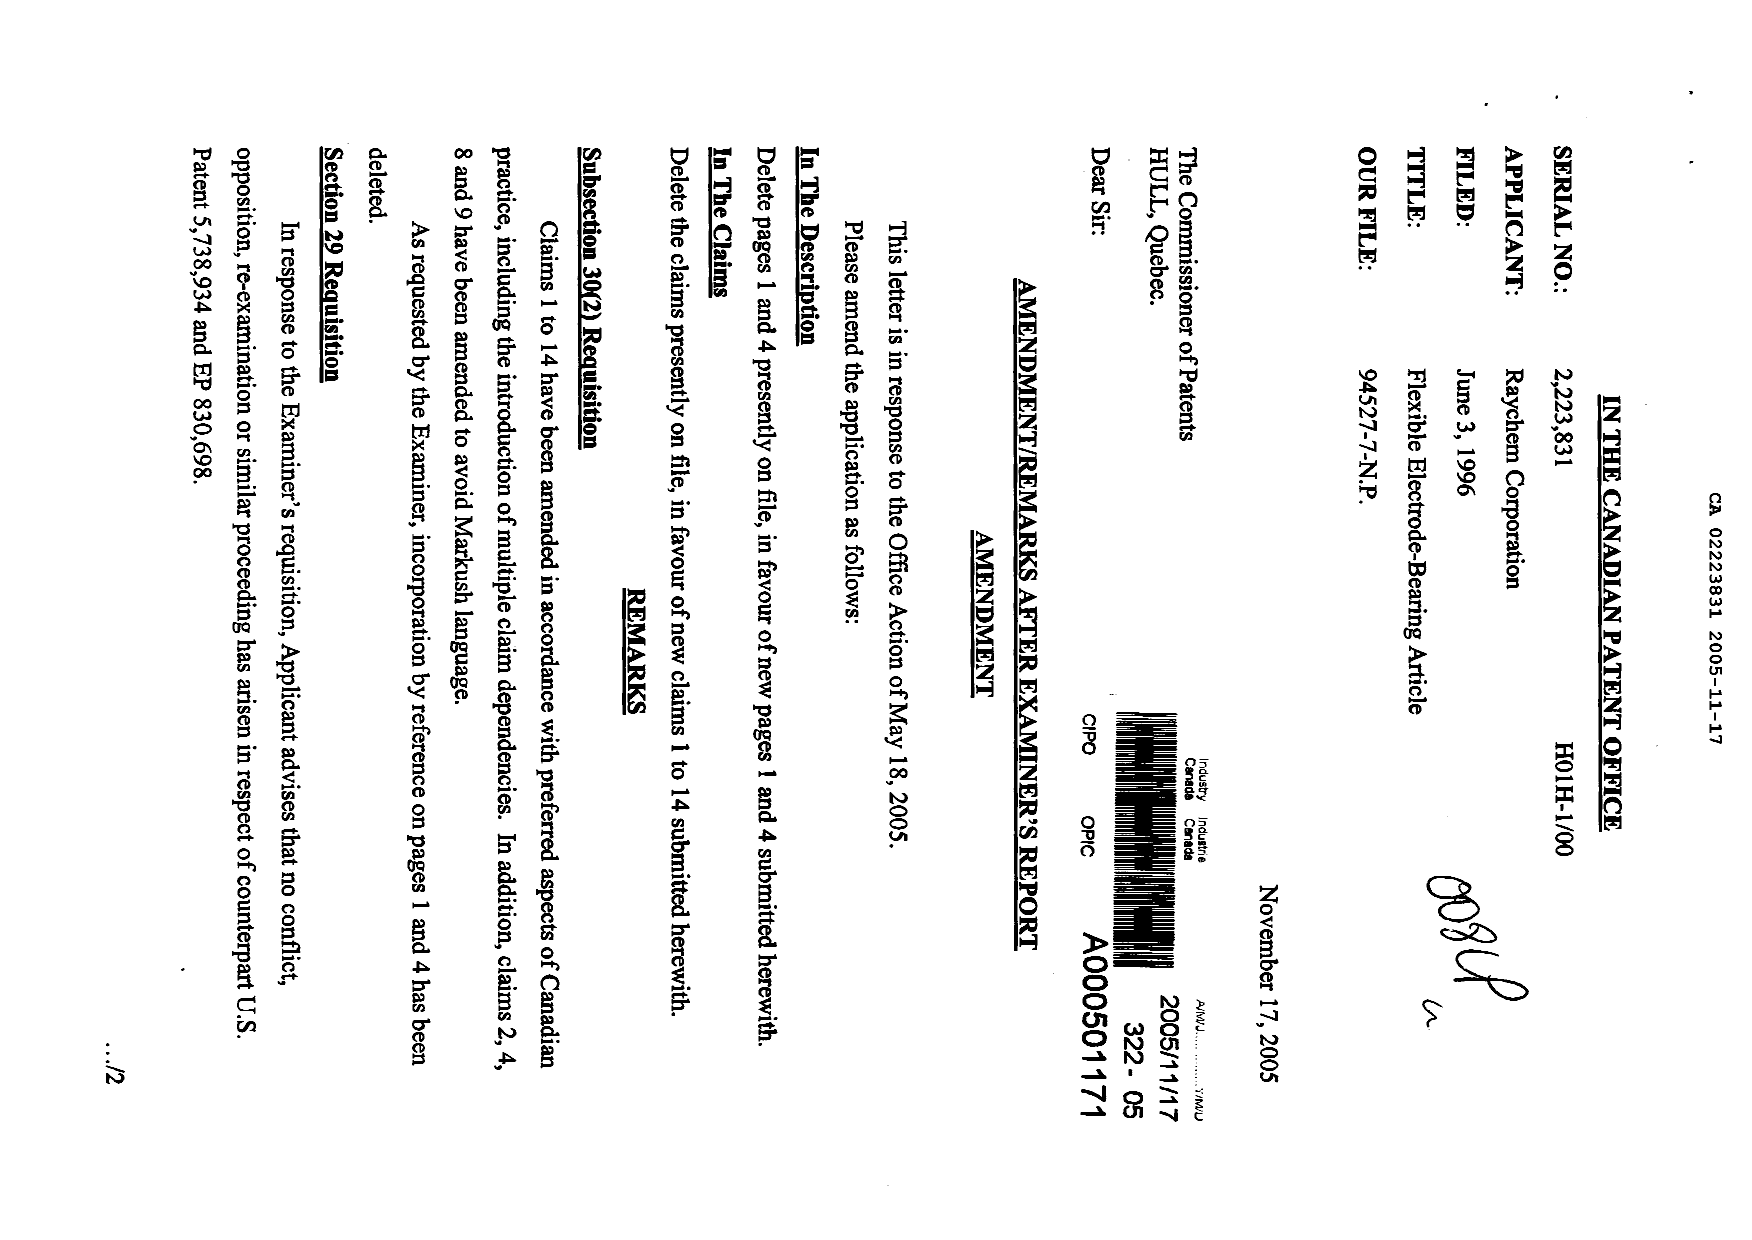 Canadian Patent Document 2223831. Prosecution-Amendment 20051117. Image 1 of 6